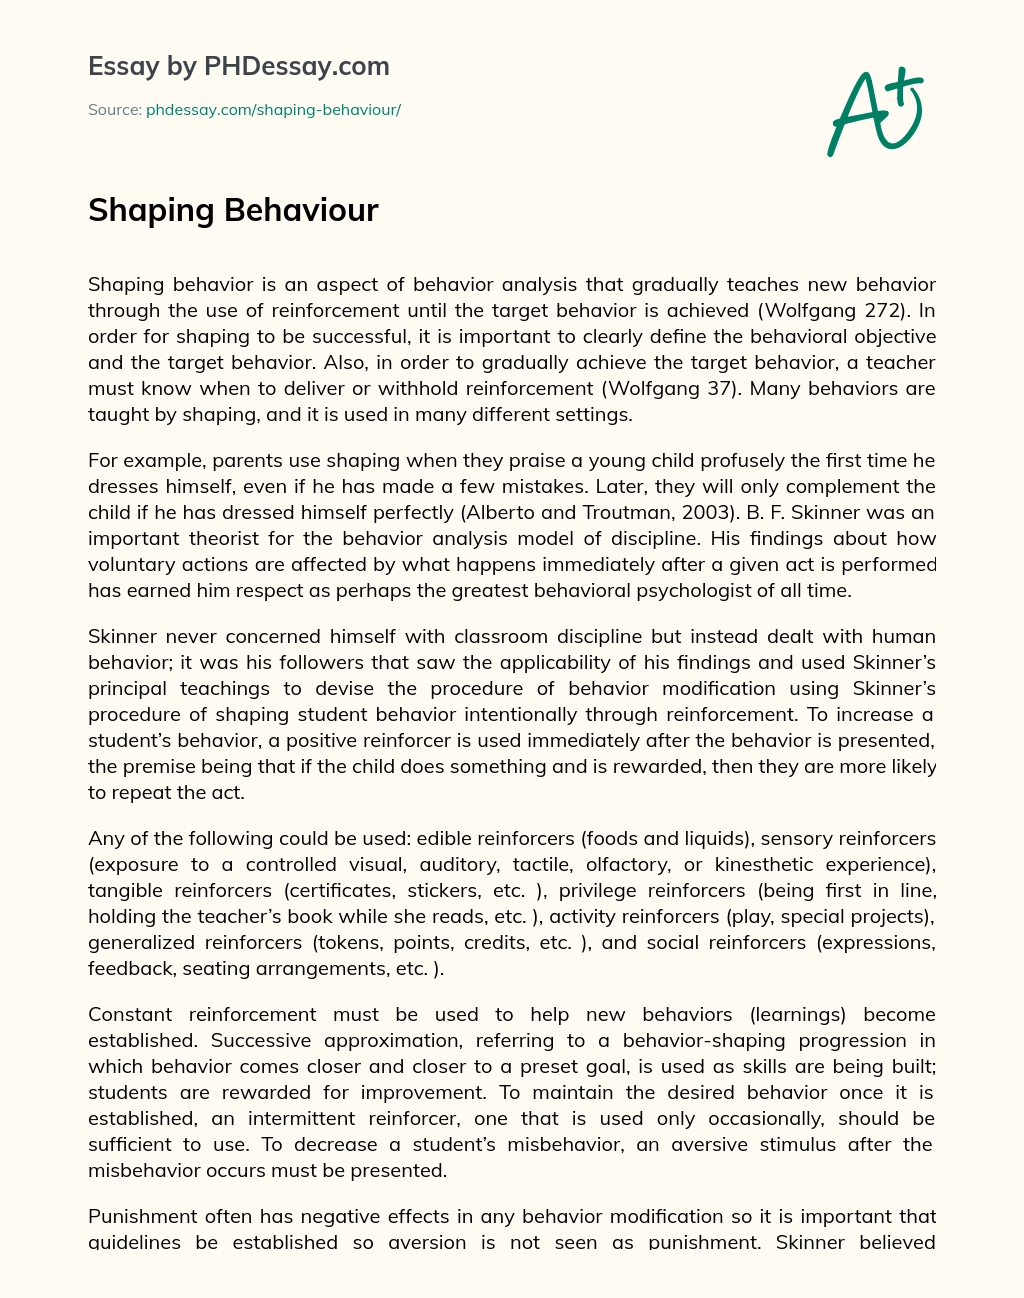 Shaping Behaviour essay